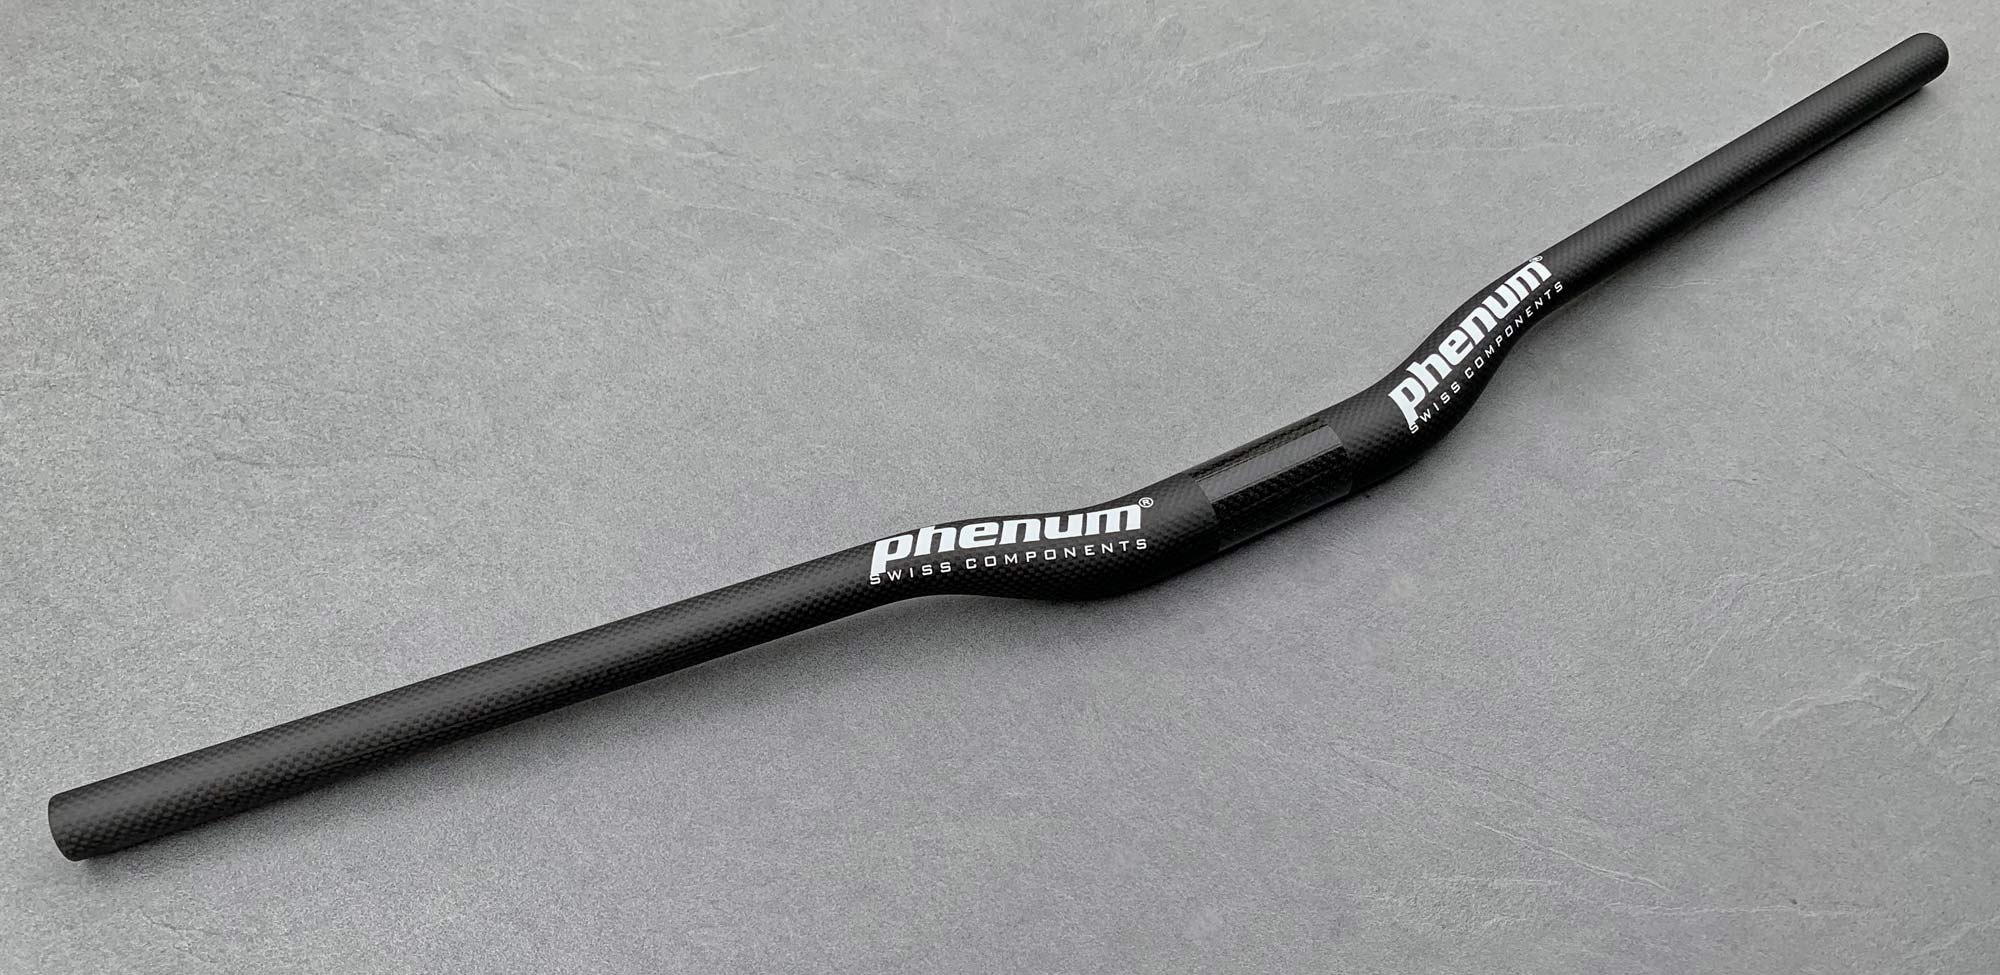 Ceetec C1 DH prototype downhill mountain bike handlebar, Phenum C1 DH carbon MTB riser bar